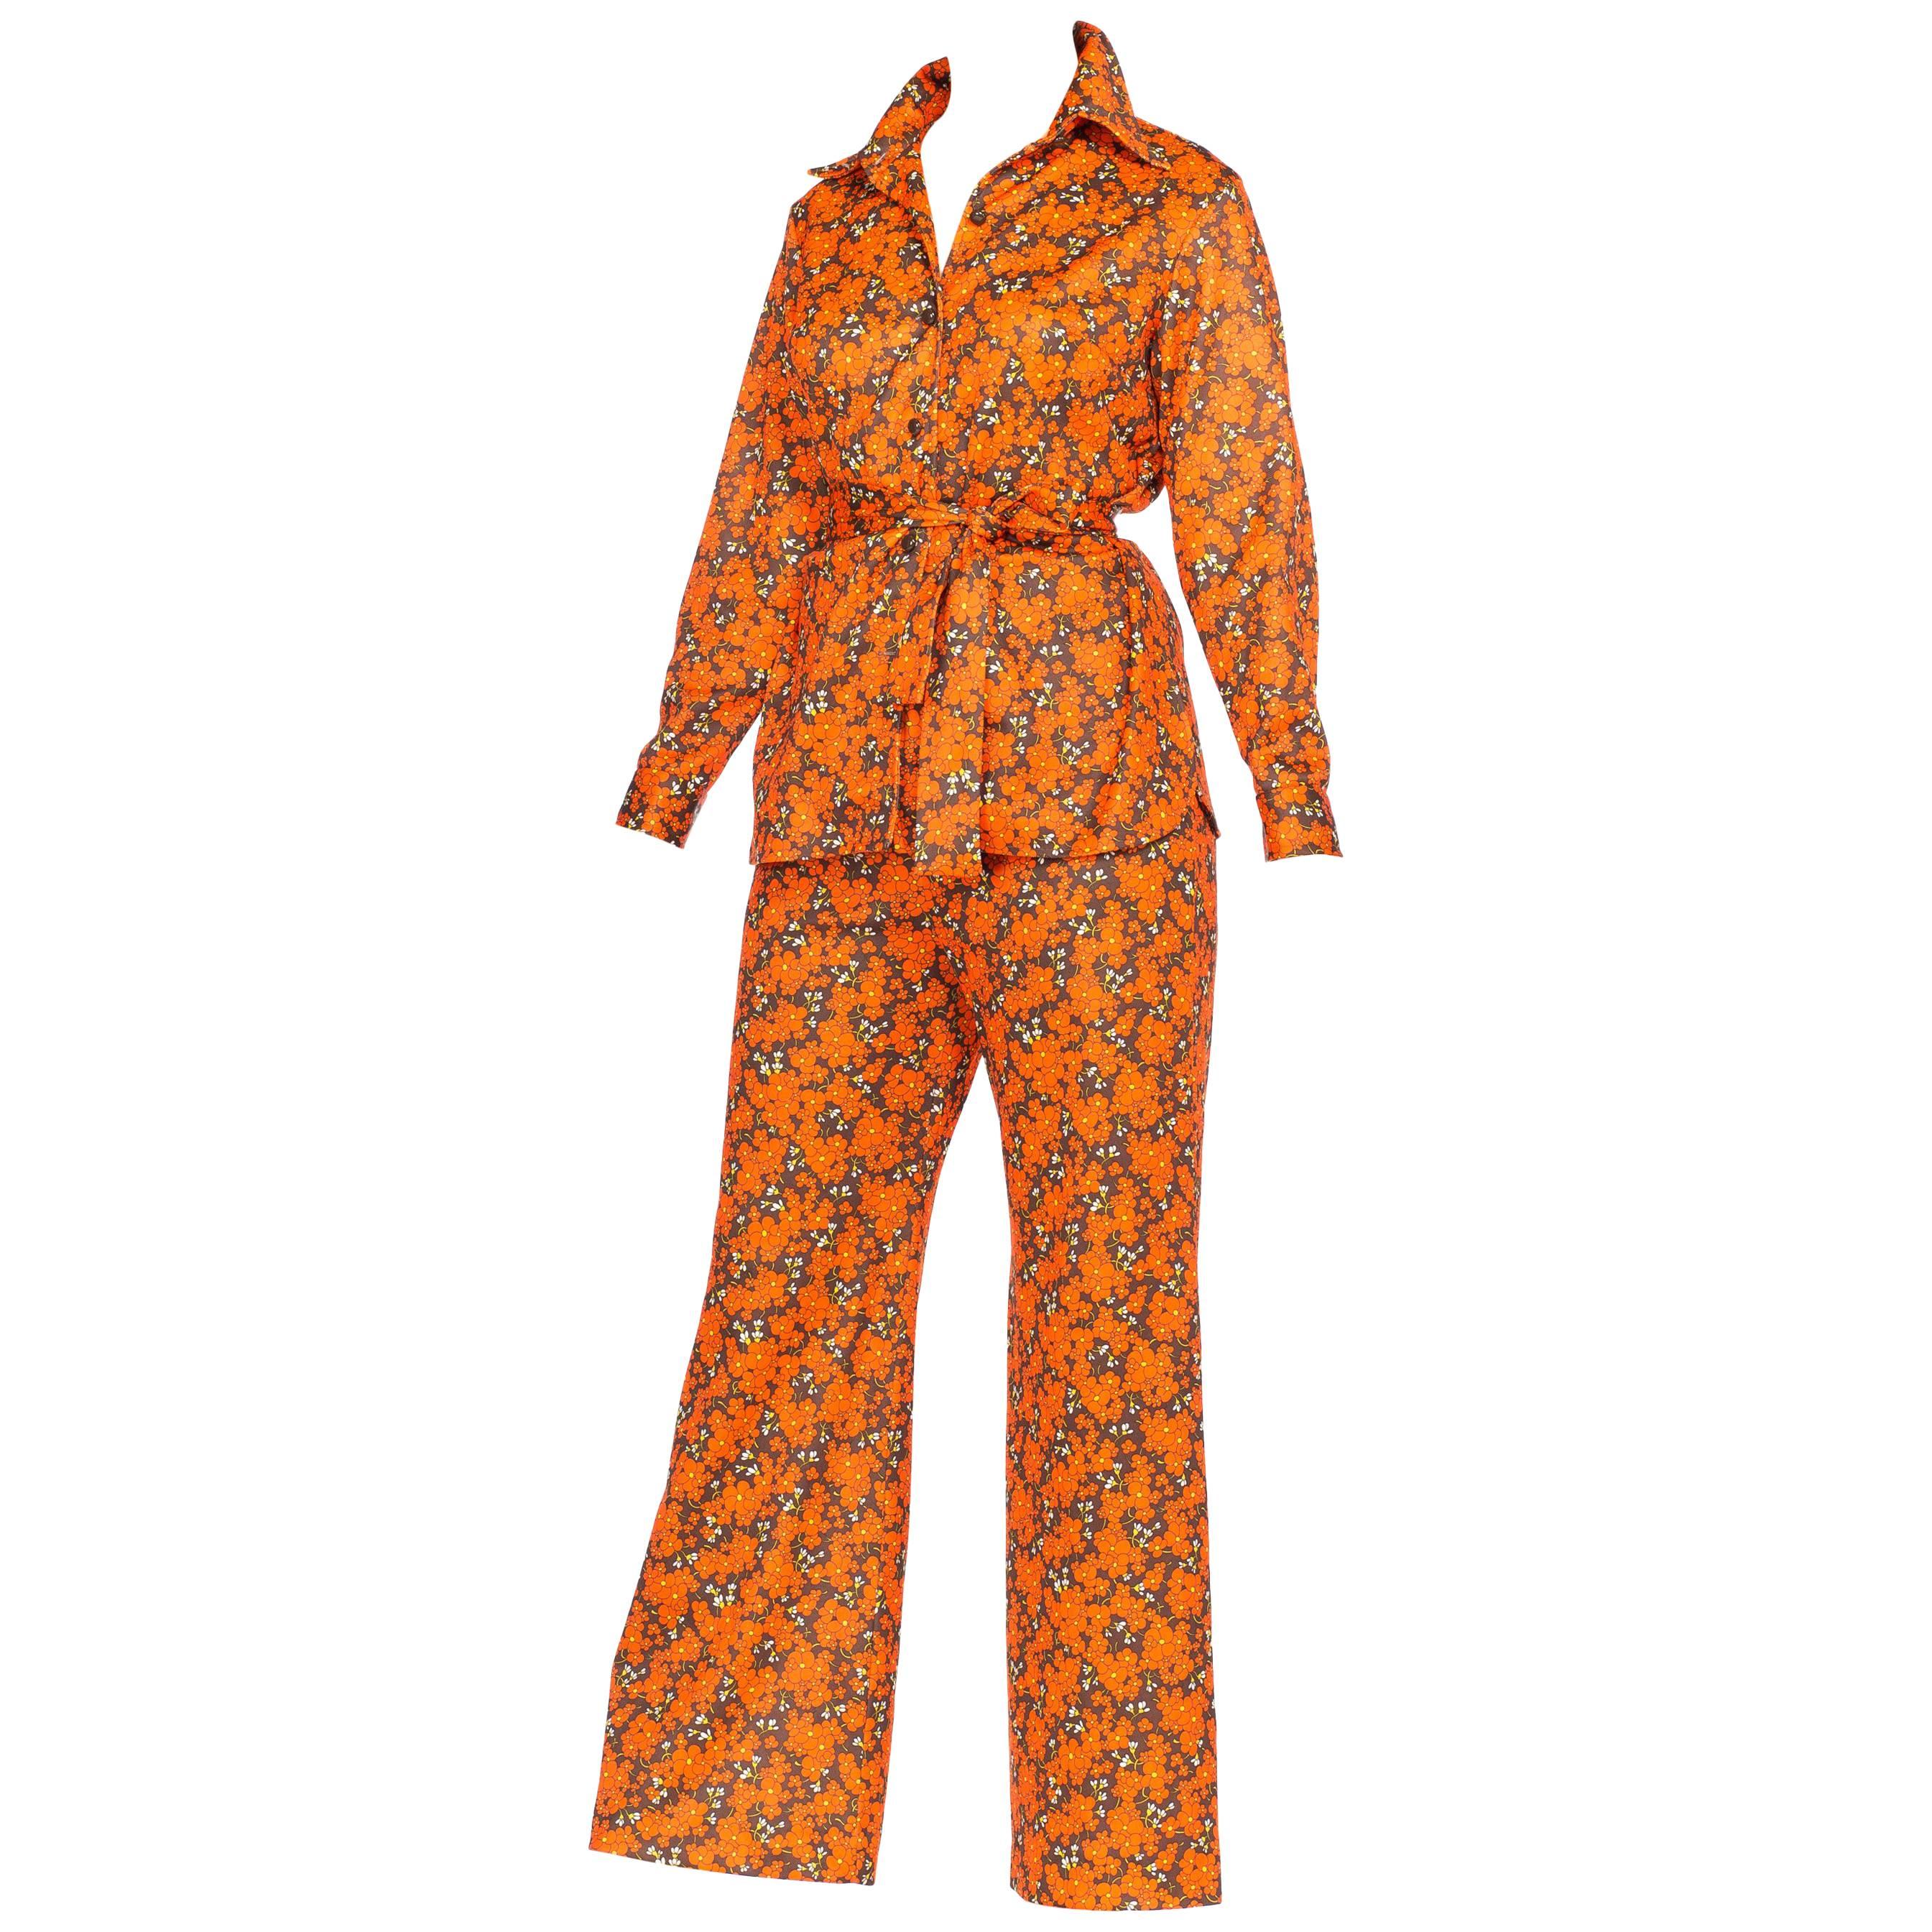 Orange and Brown Floral Mod Disco Pantsuit Set, 1970s